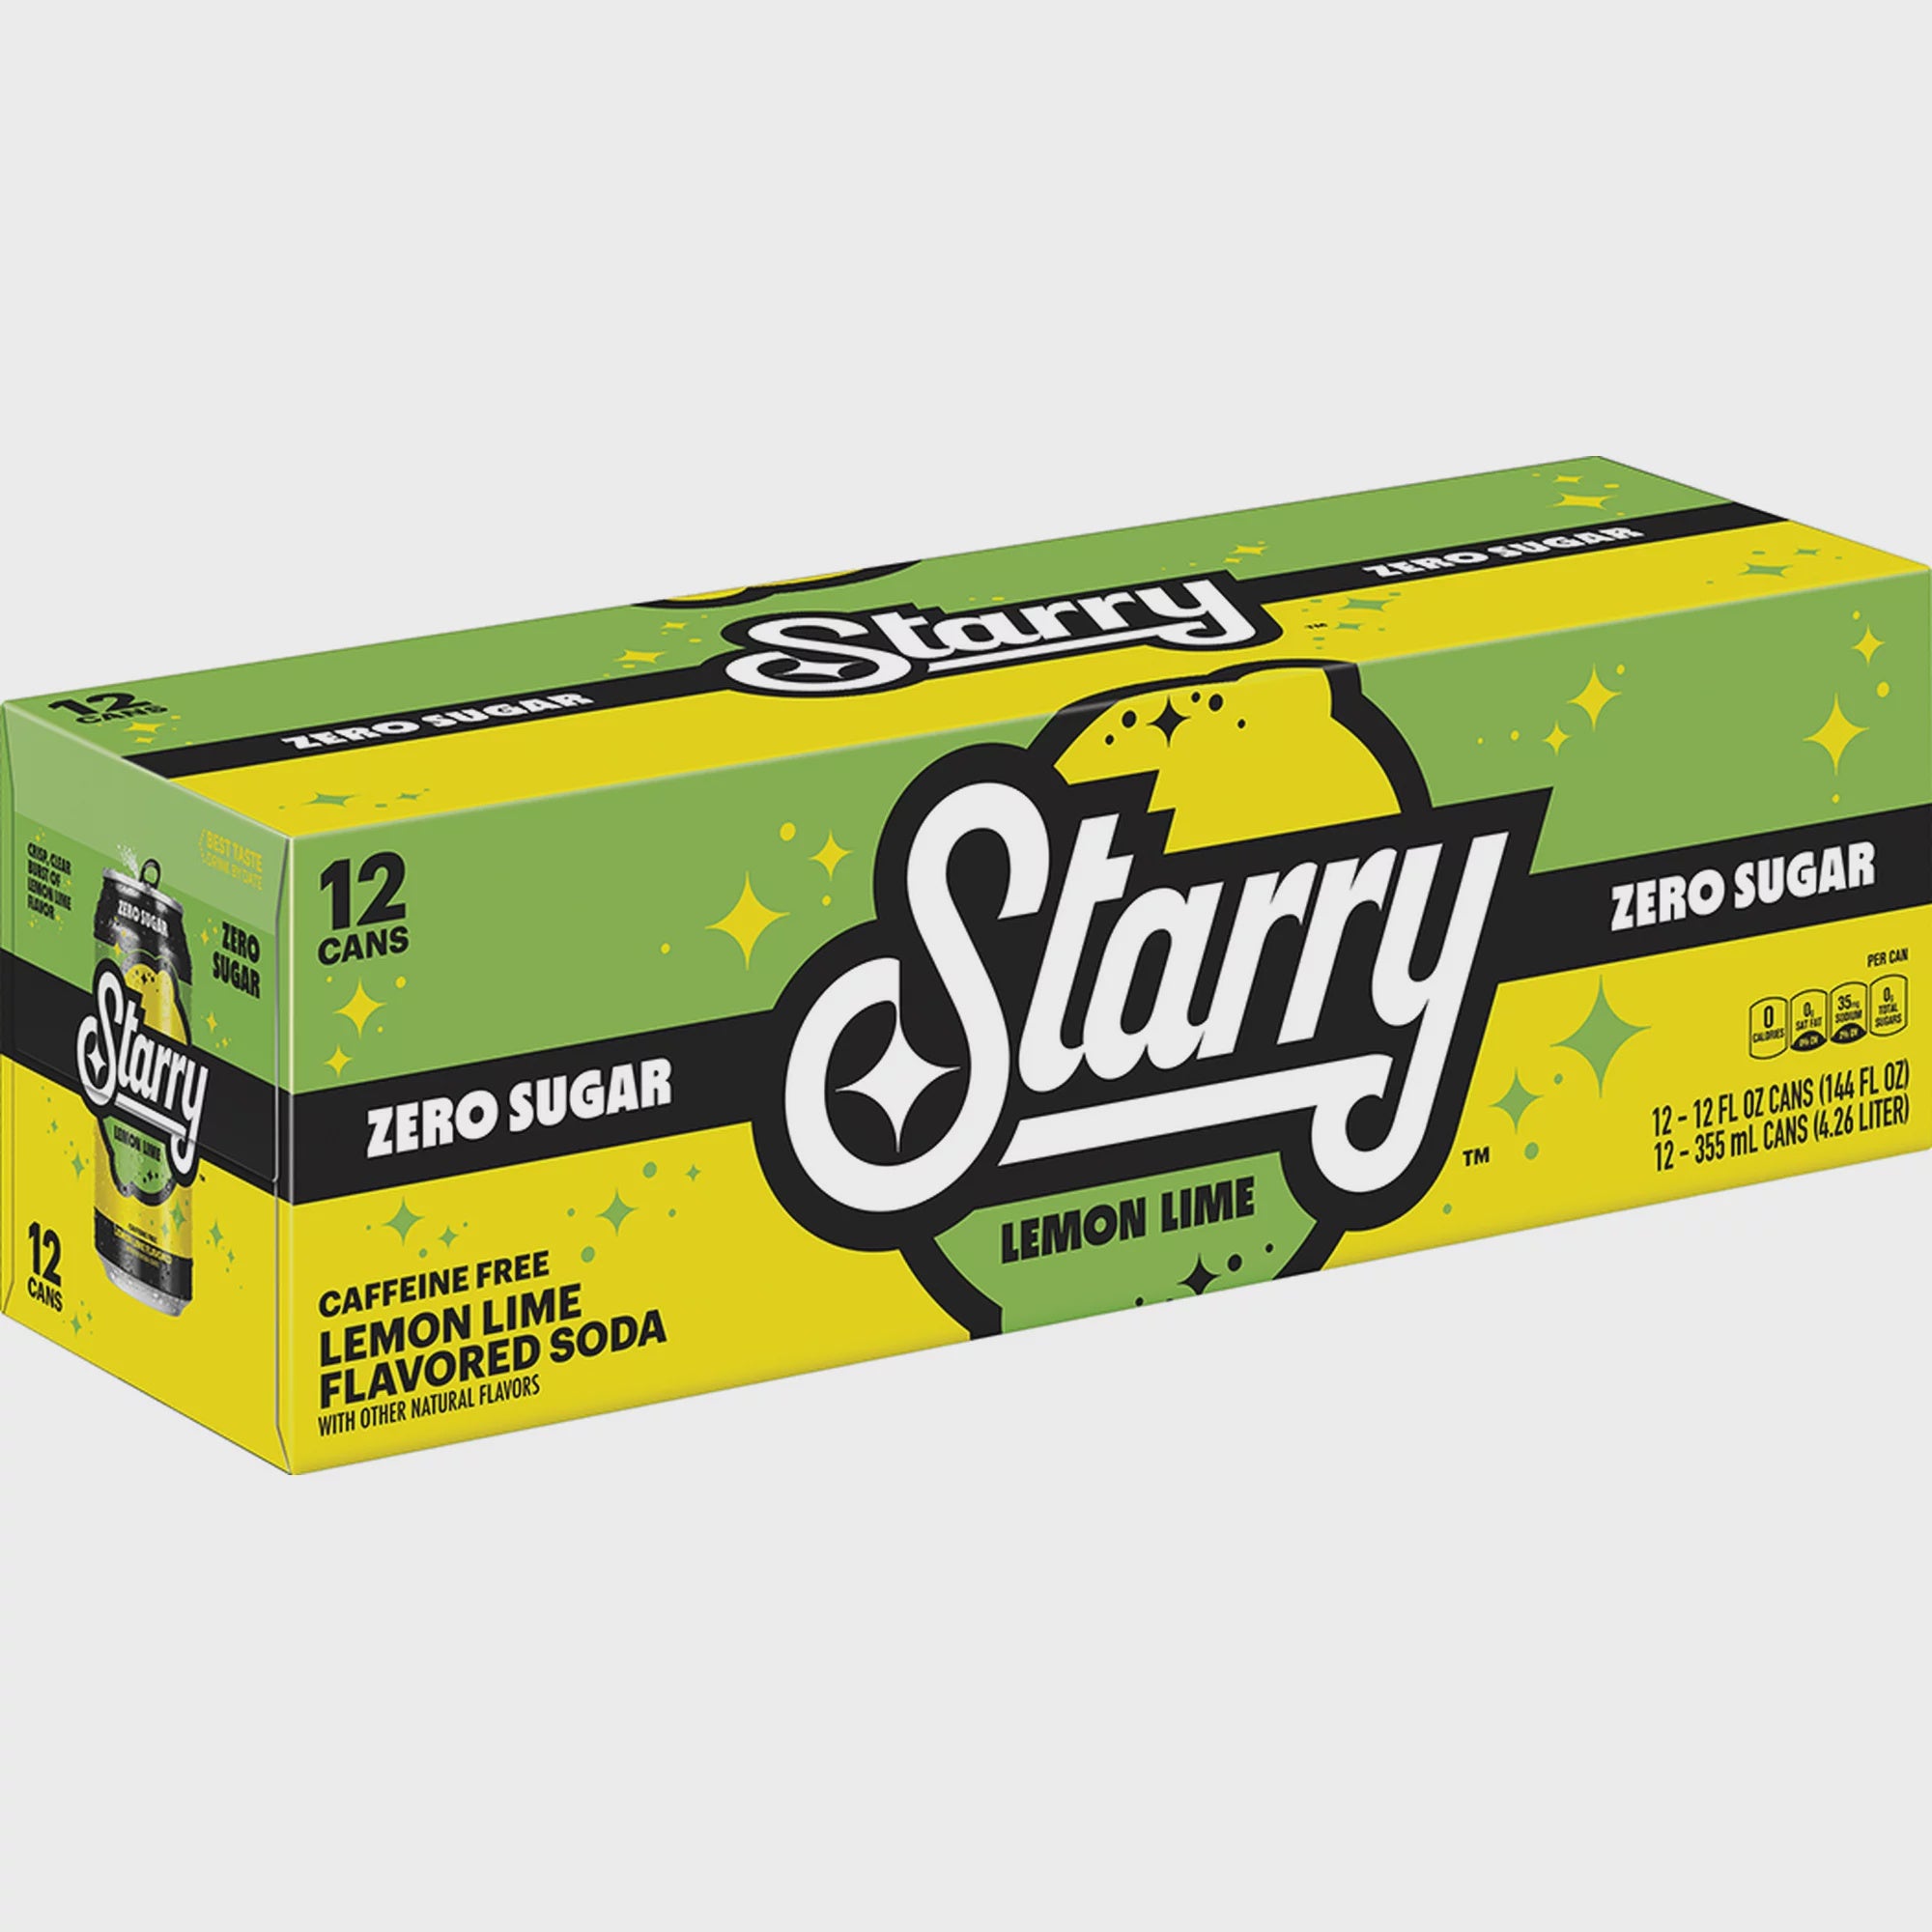 Starry Zero 12pk cans